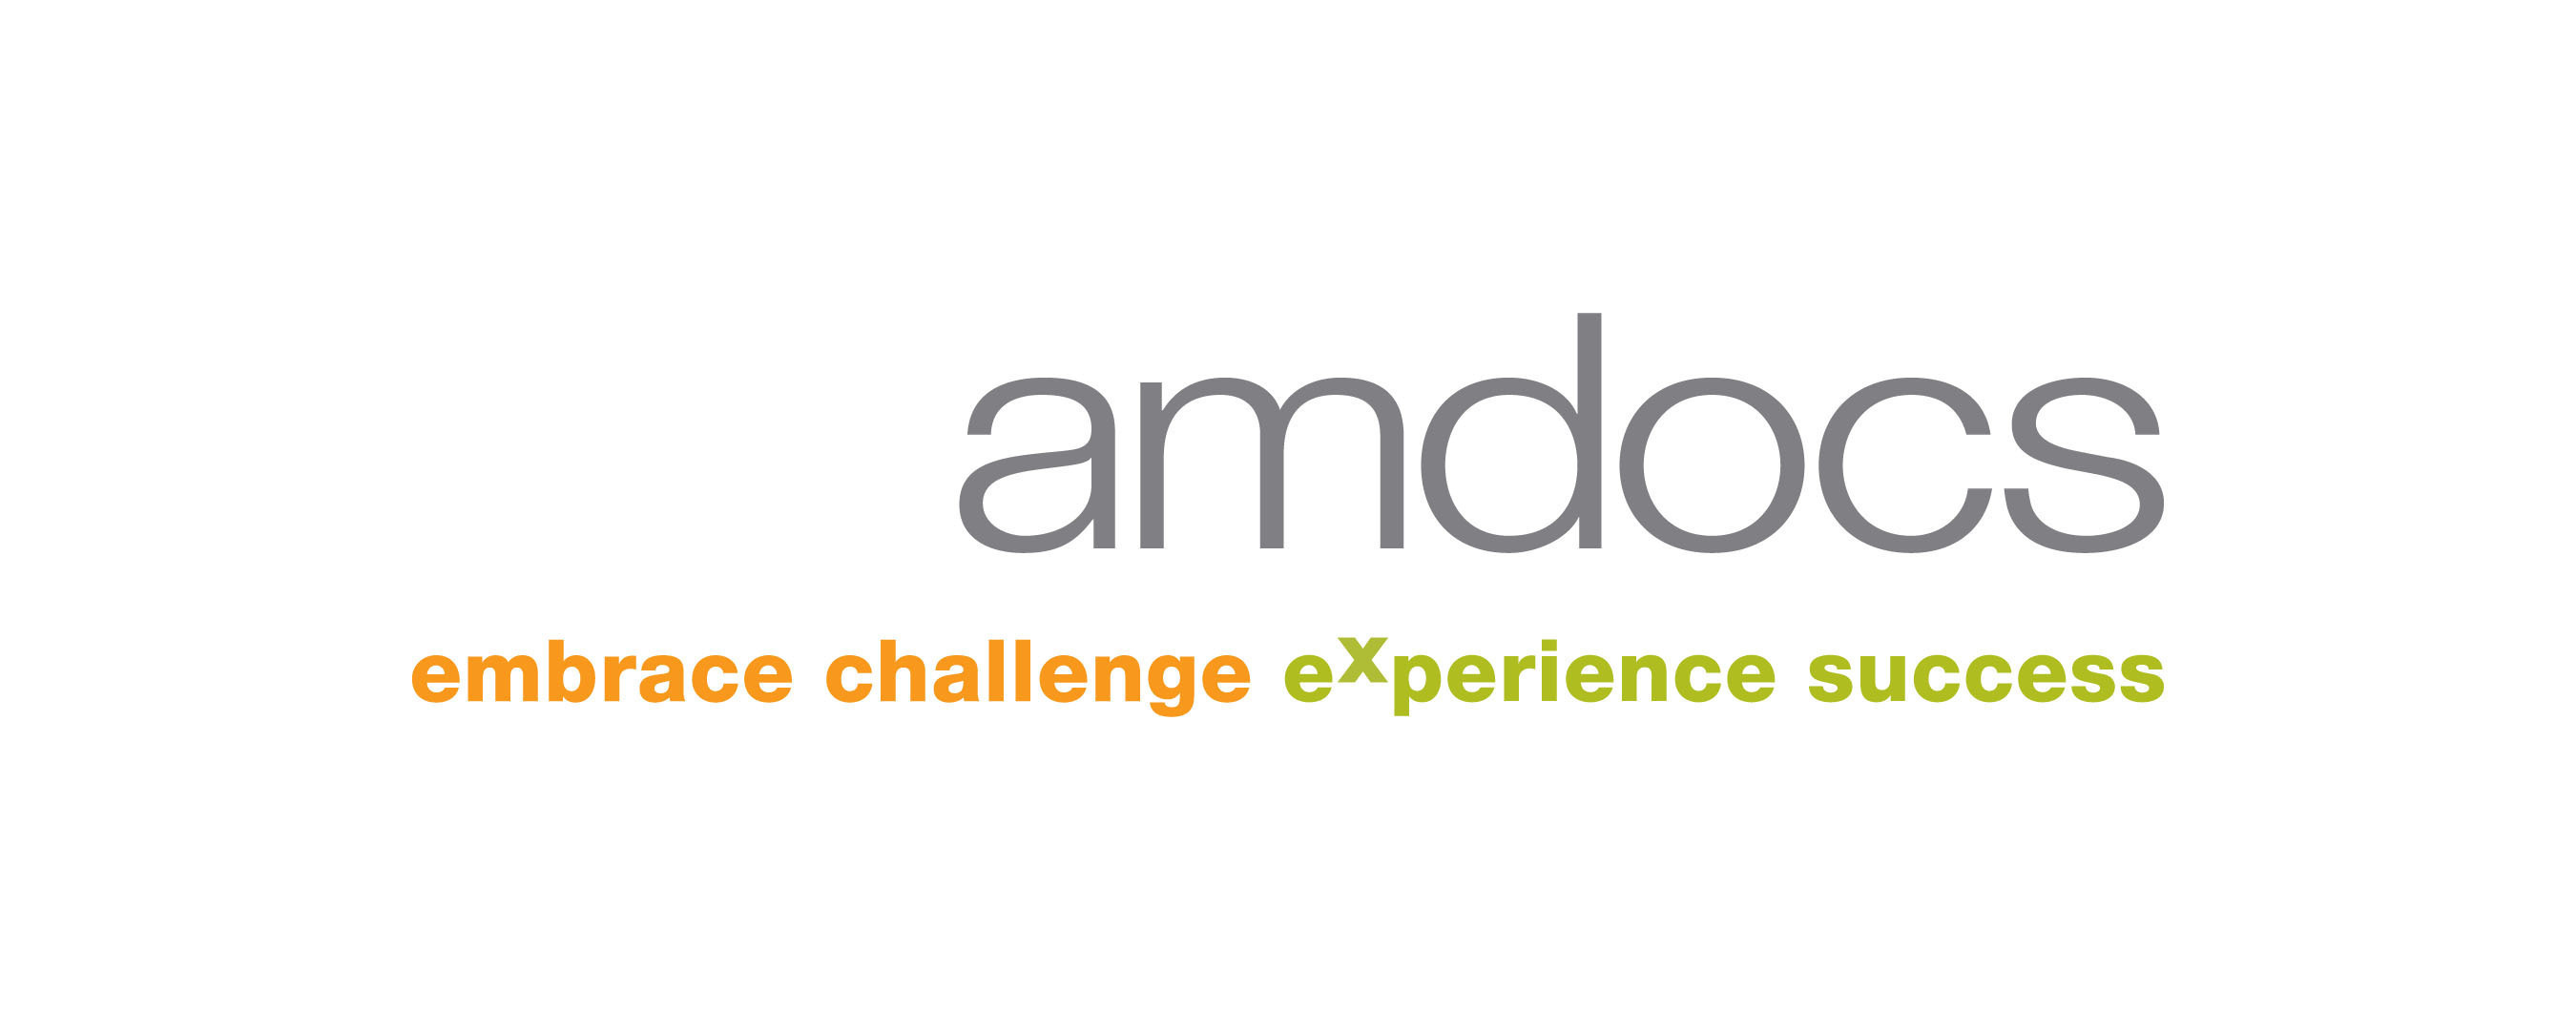 Amdocs Logo. (PRNewsFoto/Amdocs) (PRNewsFoto/)